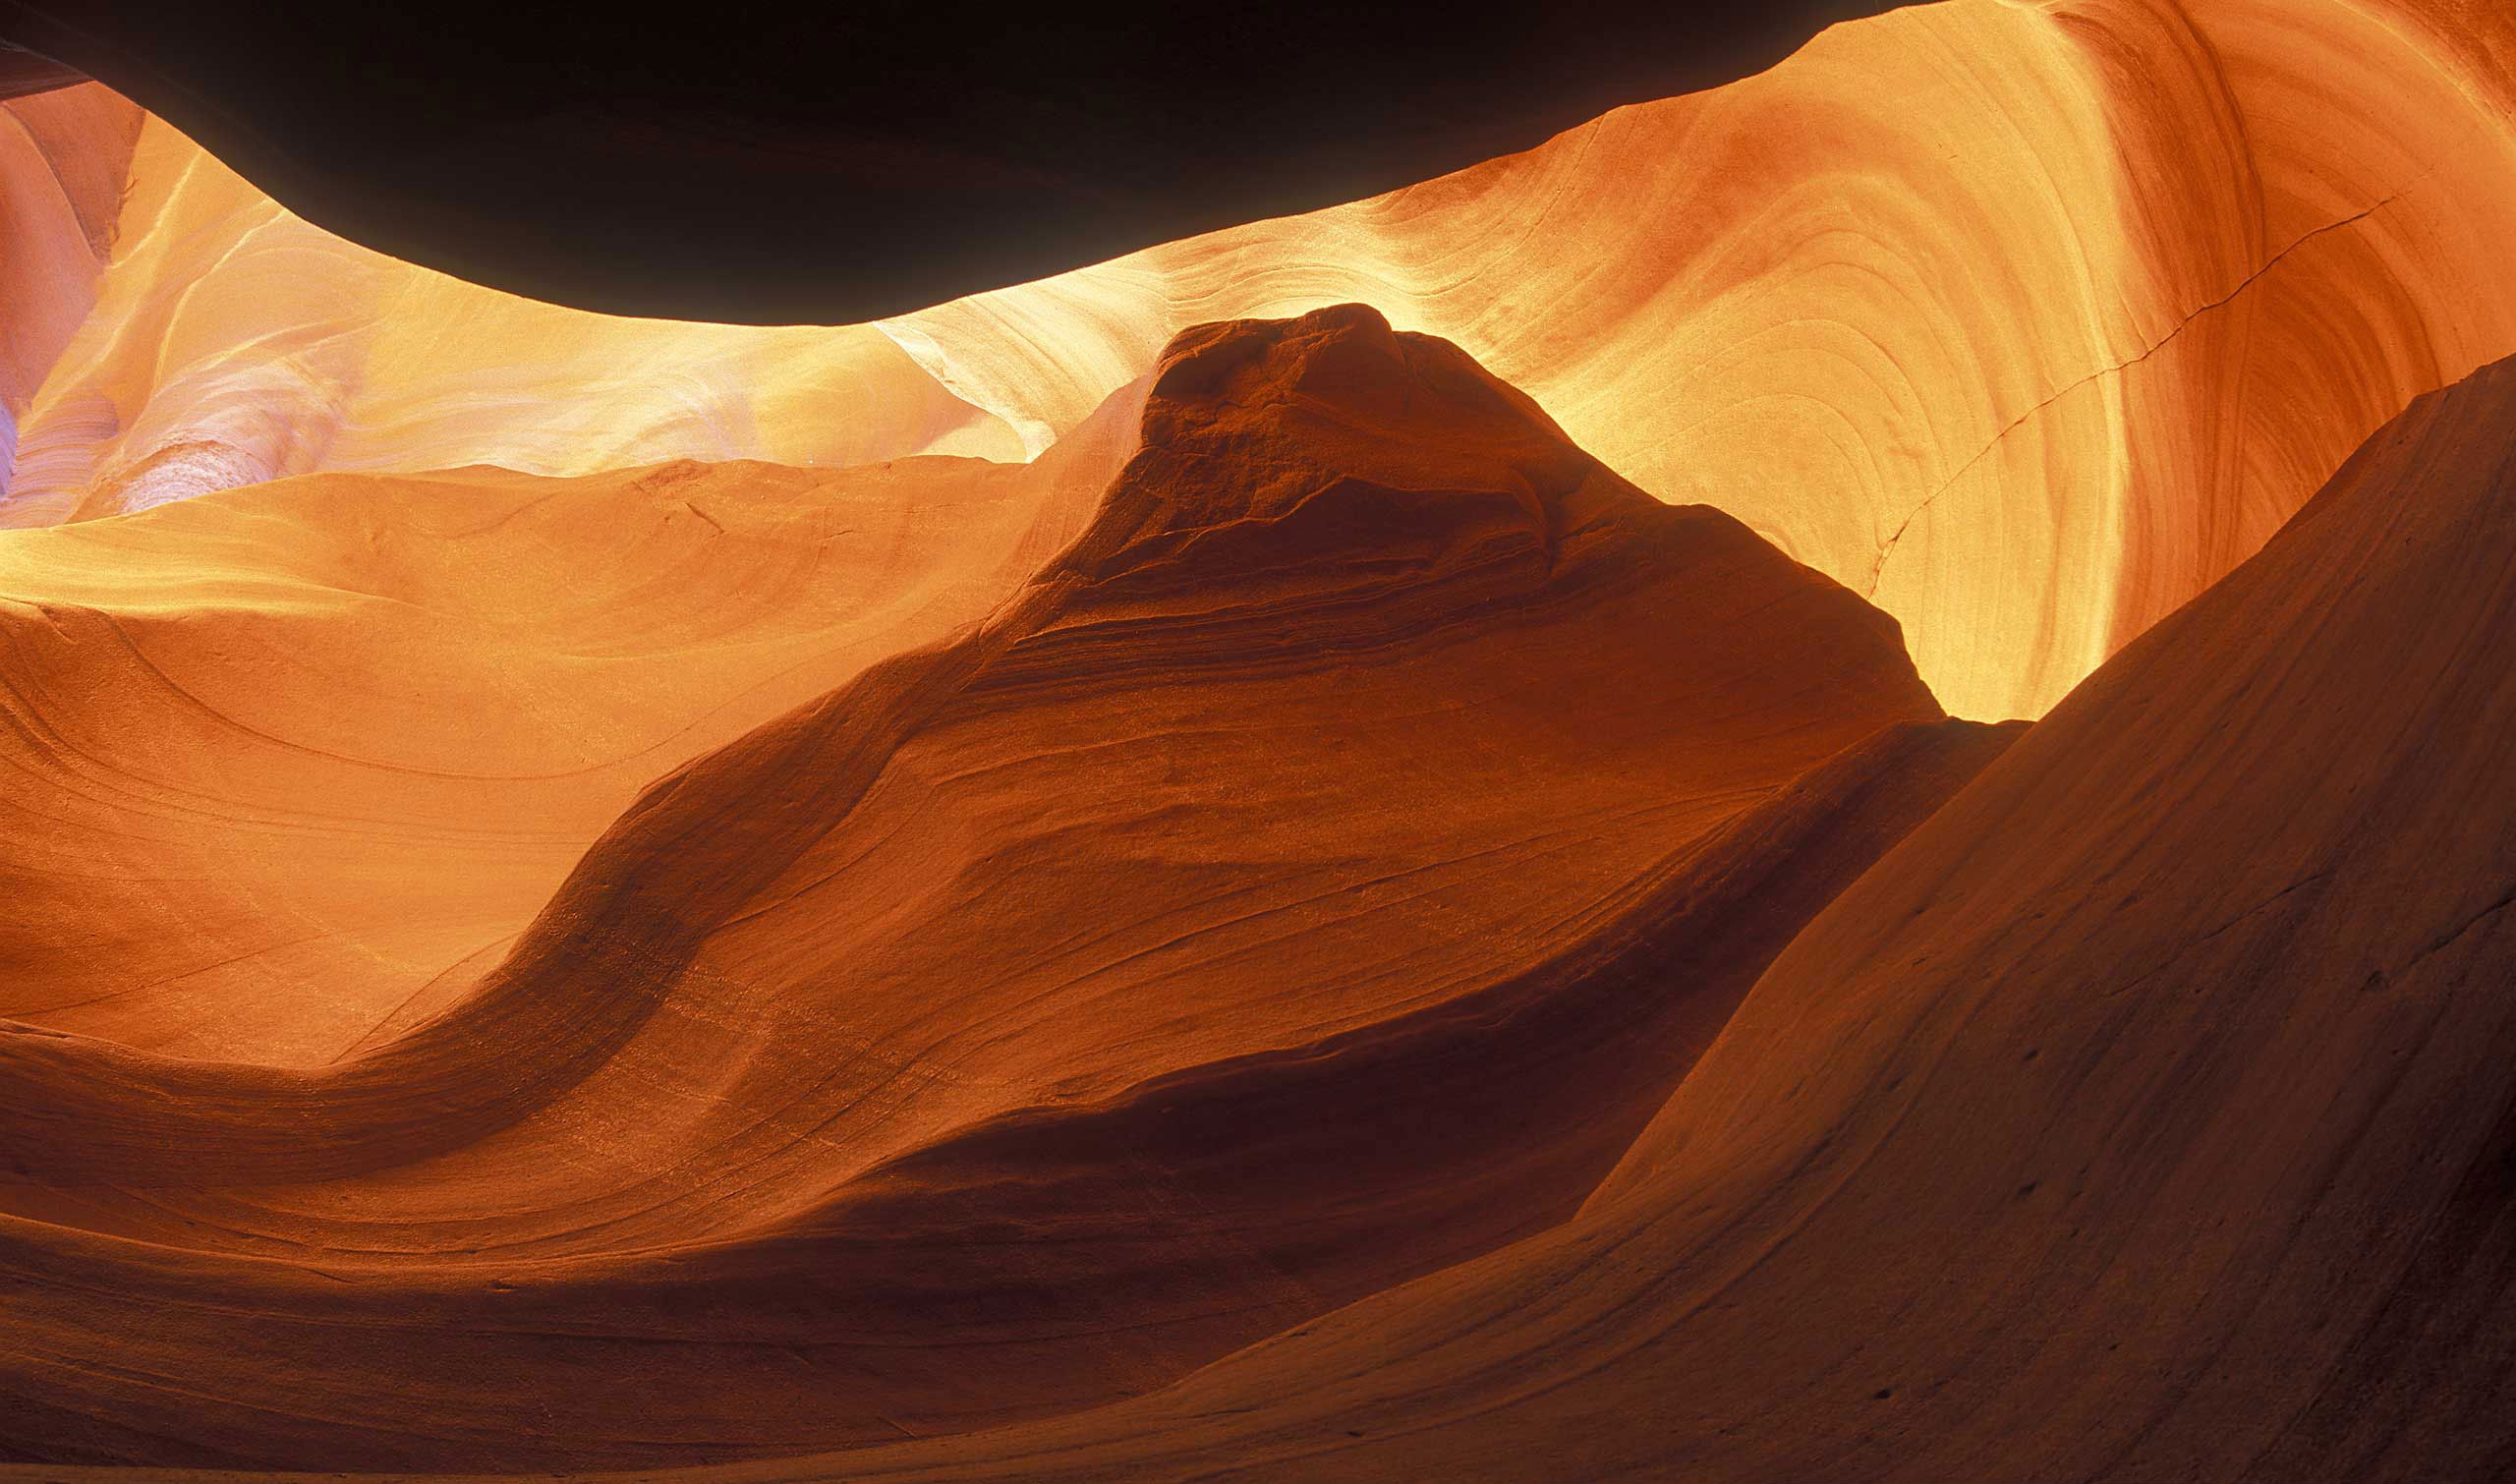 Antelope Canyon, a serene natural wonder captured in this desktop wallpaper.